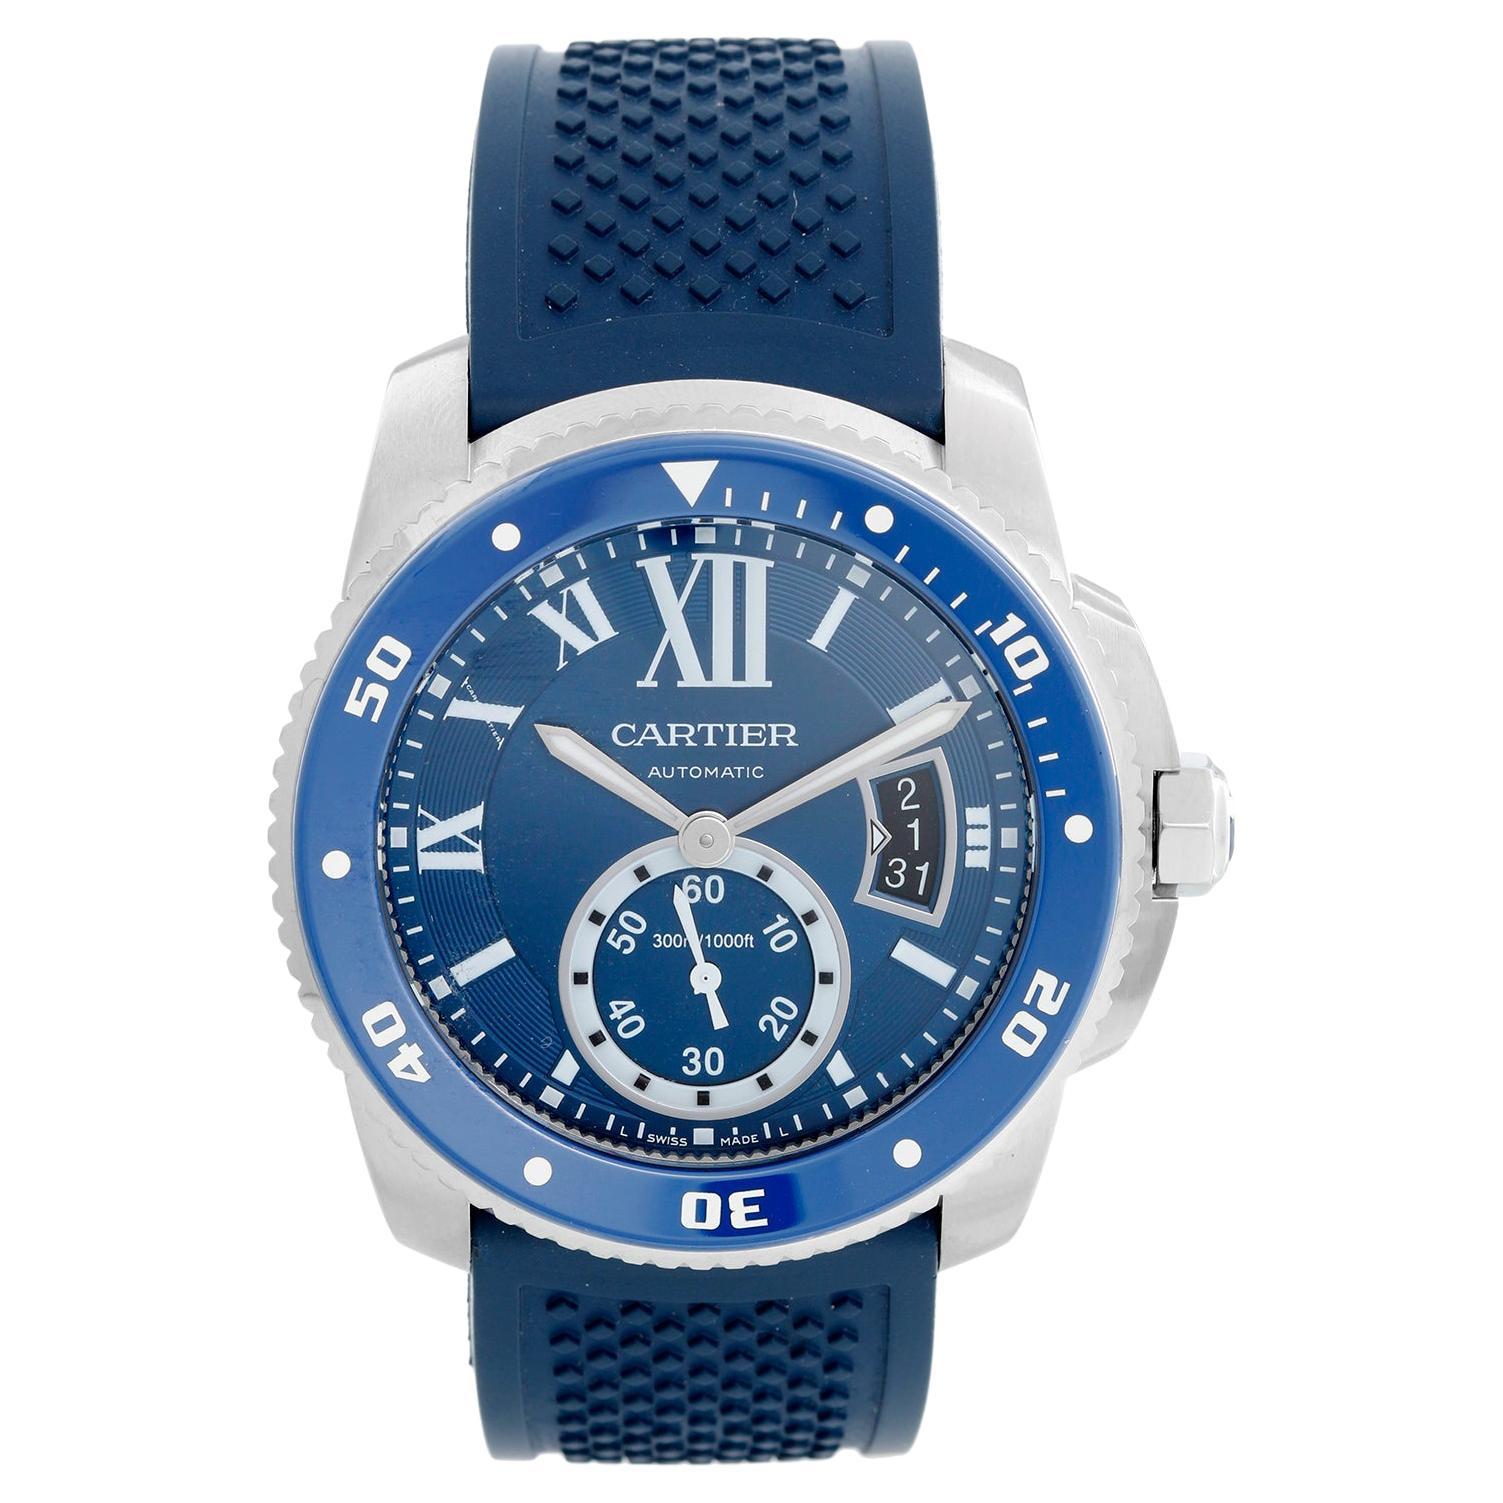 Calibre De Diver Cartier Men's Stainless Steel Watch WSCA0011